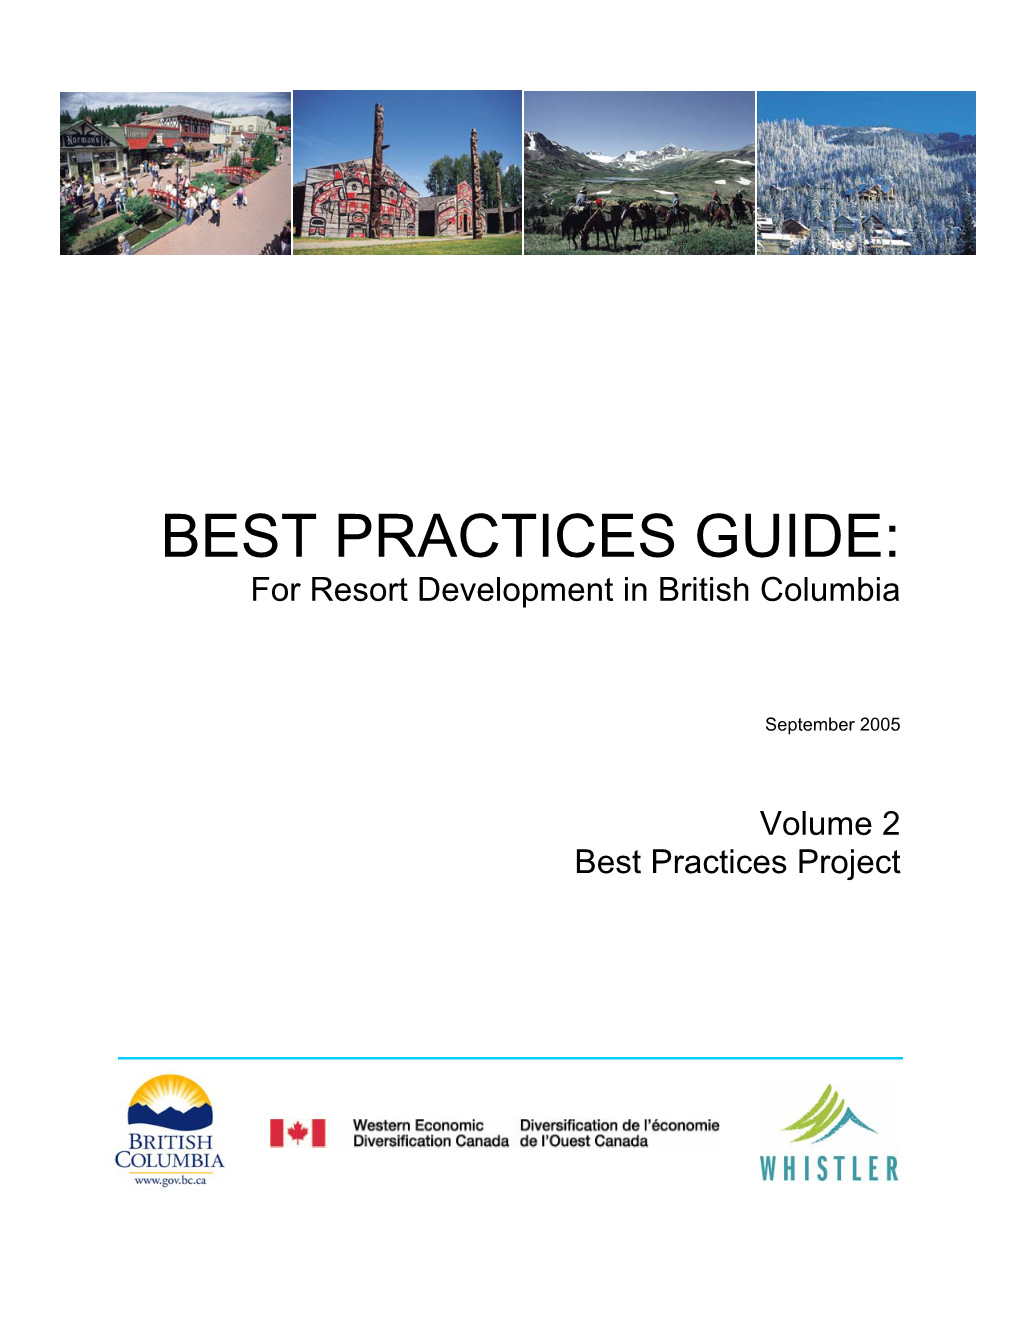 BEST PRACTICES GUIDE: for Resort Development in British Columbia